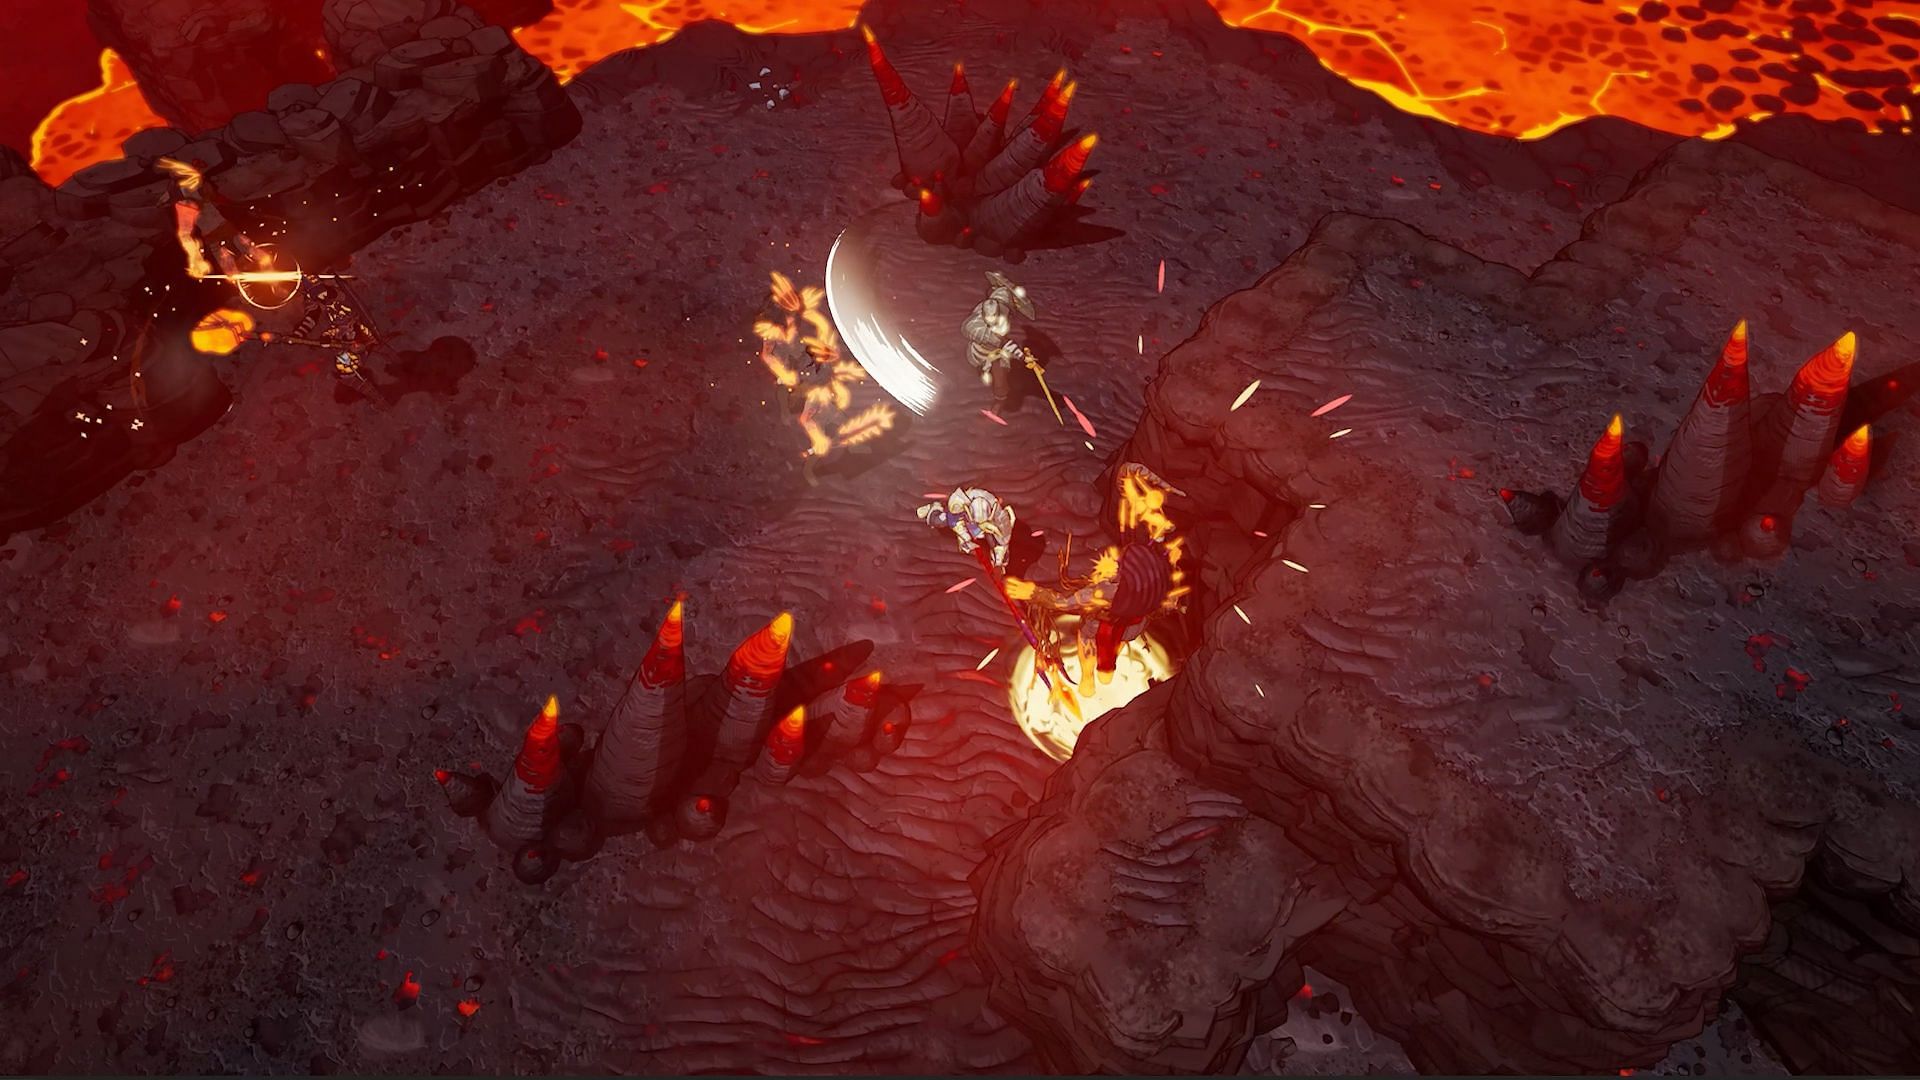 Season 3: Inferno Saga - Survival 2.0 - Tribes of Midgard